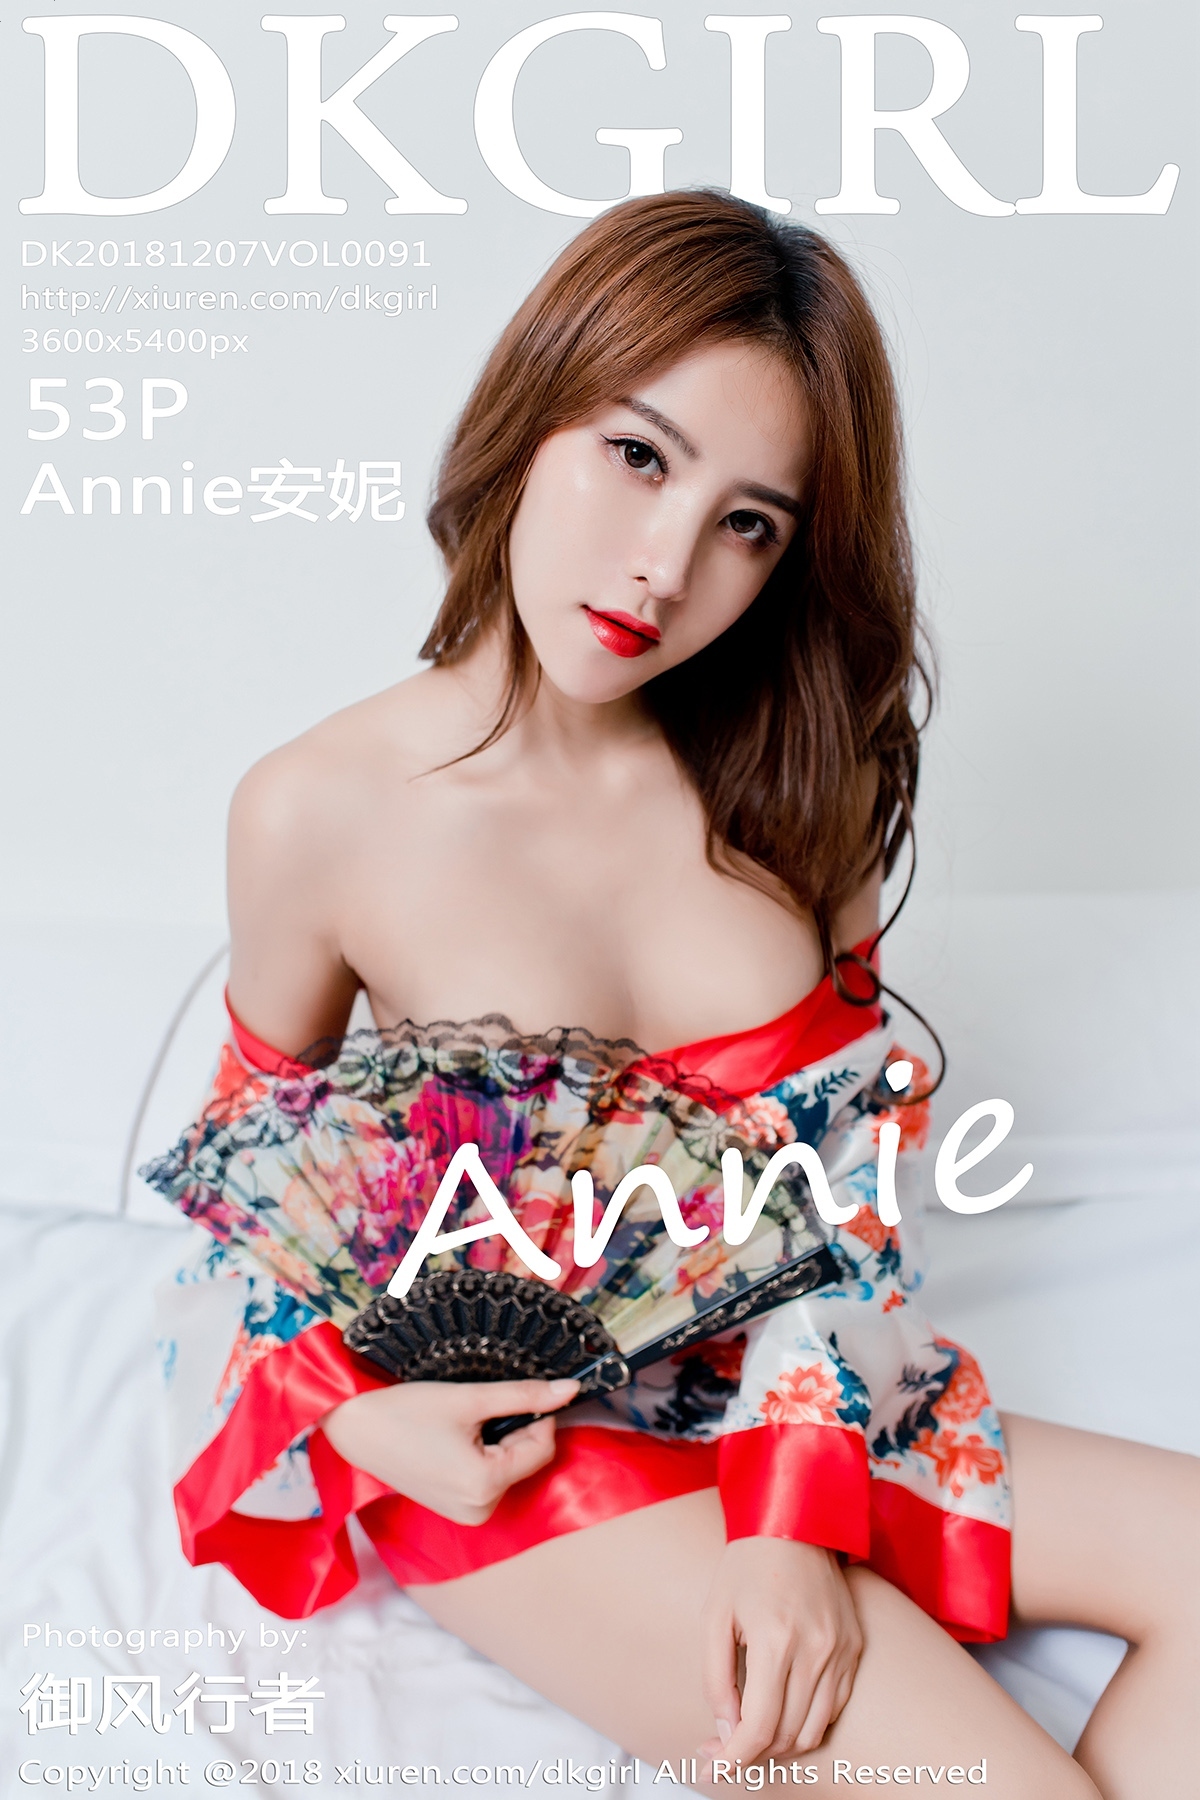 [dkgirl] December 07, 2018 vol.091 Annie